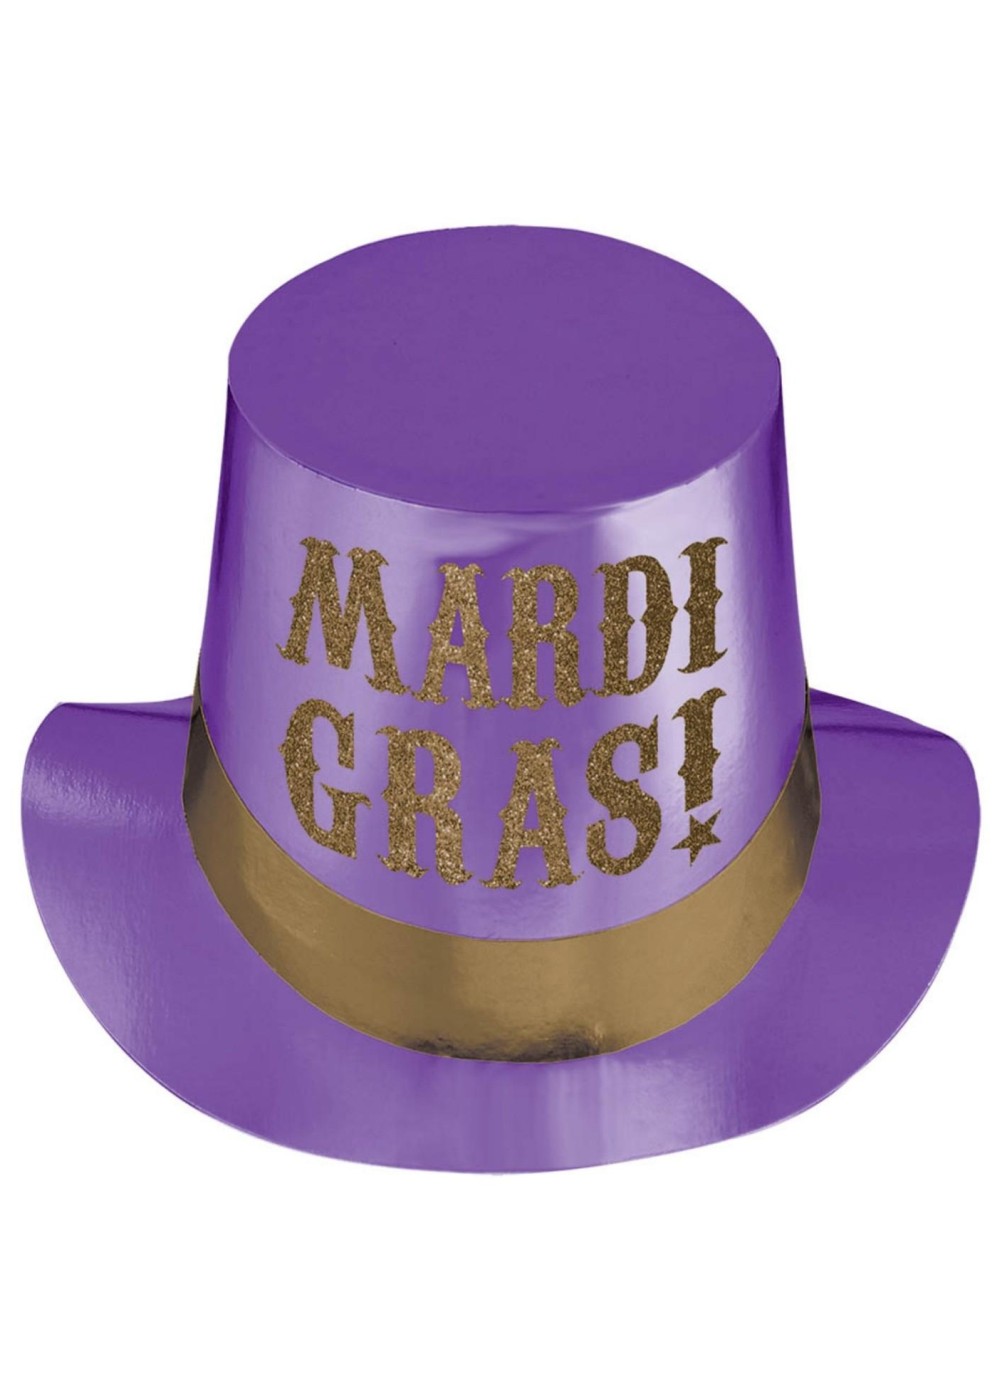  Mardi Gras Hat